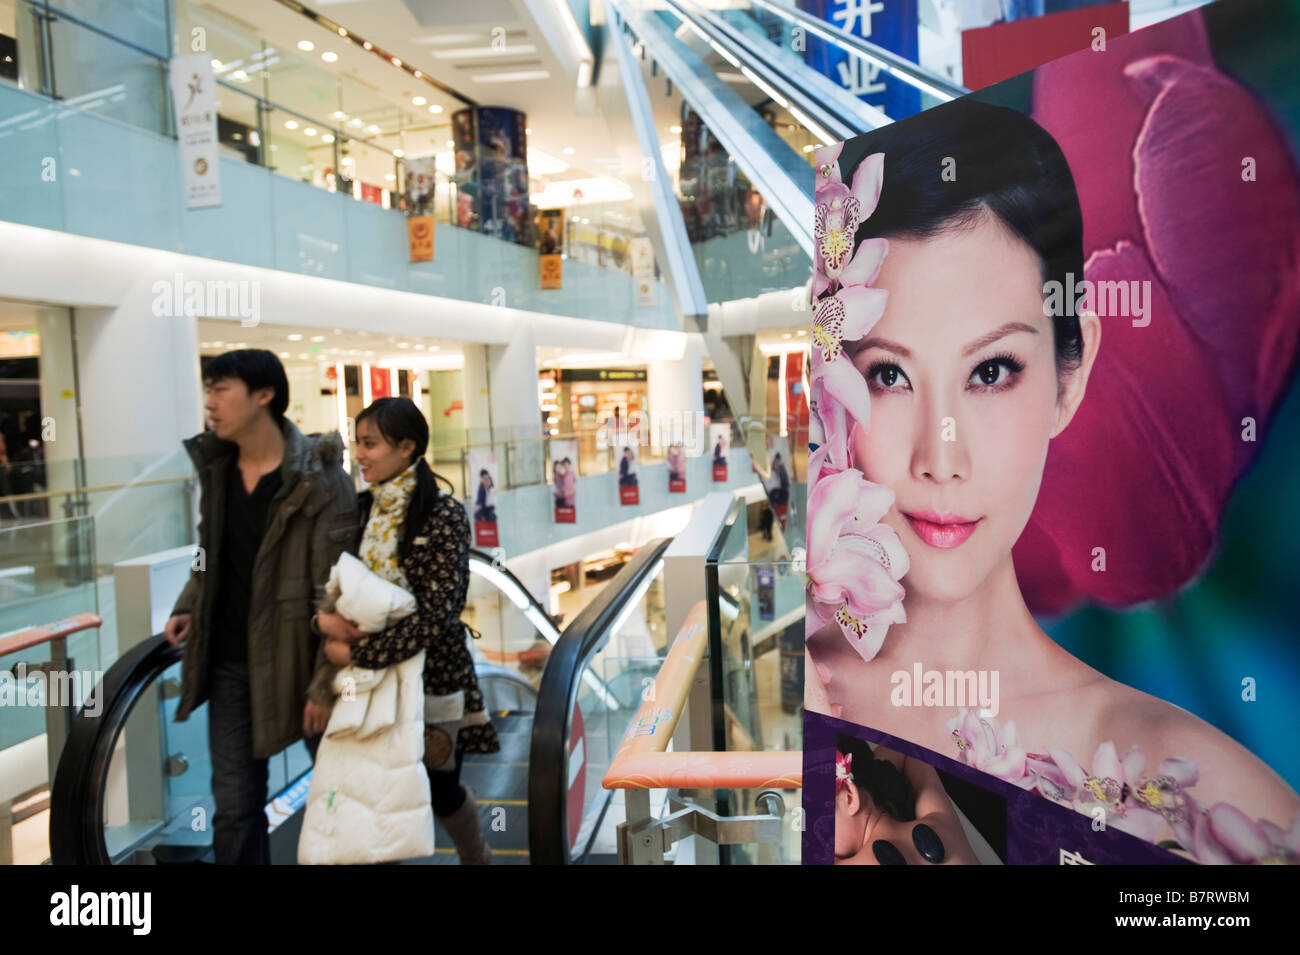 Advertising billboard poster inside modern shopping mall in Beijing China 2009 Stock Photo